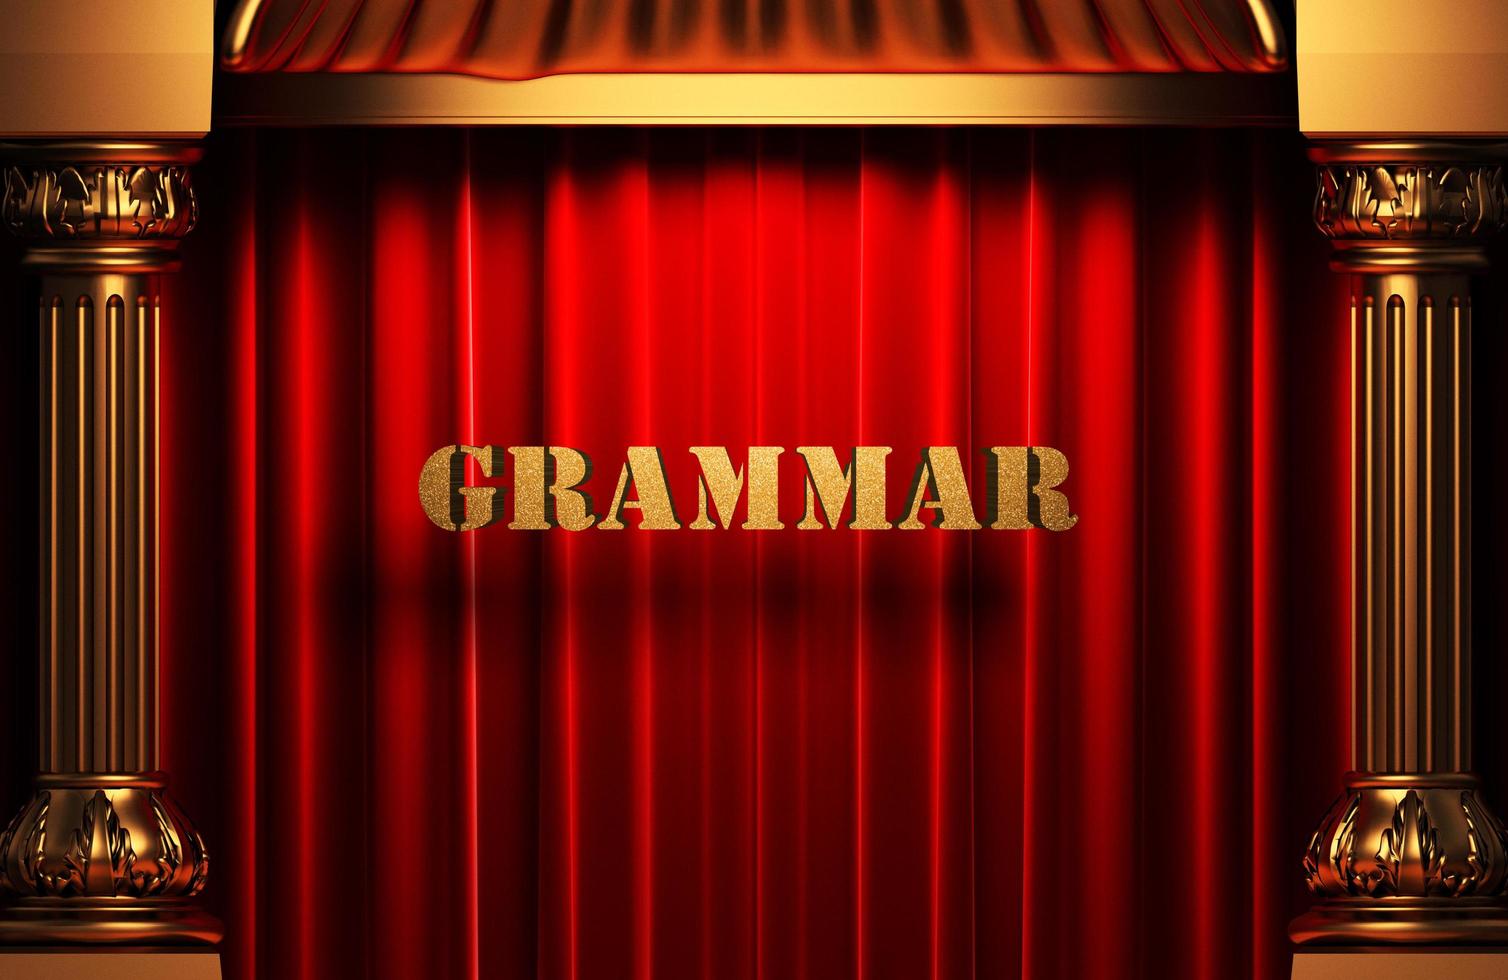 Grammatik goldenes Wort auf rotem Vorhang foto